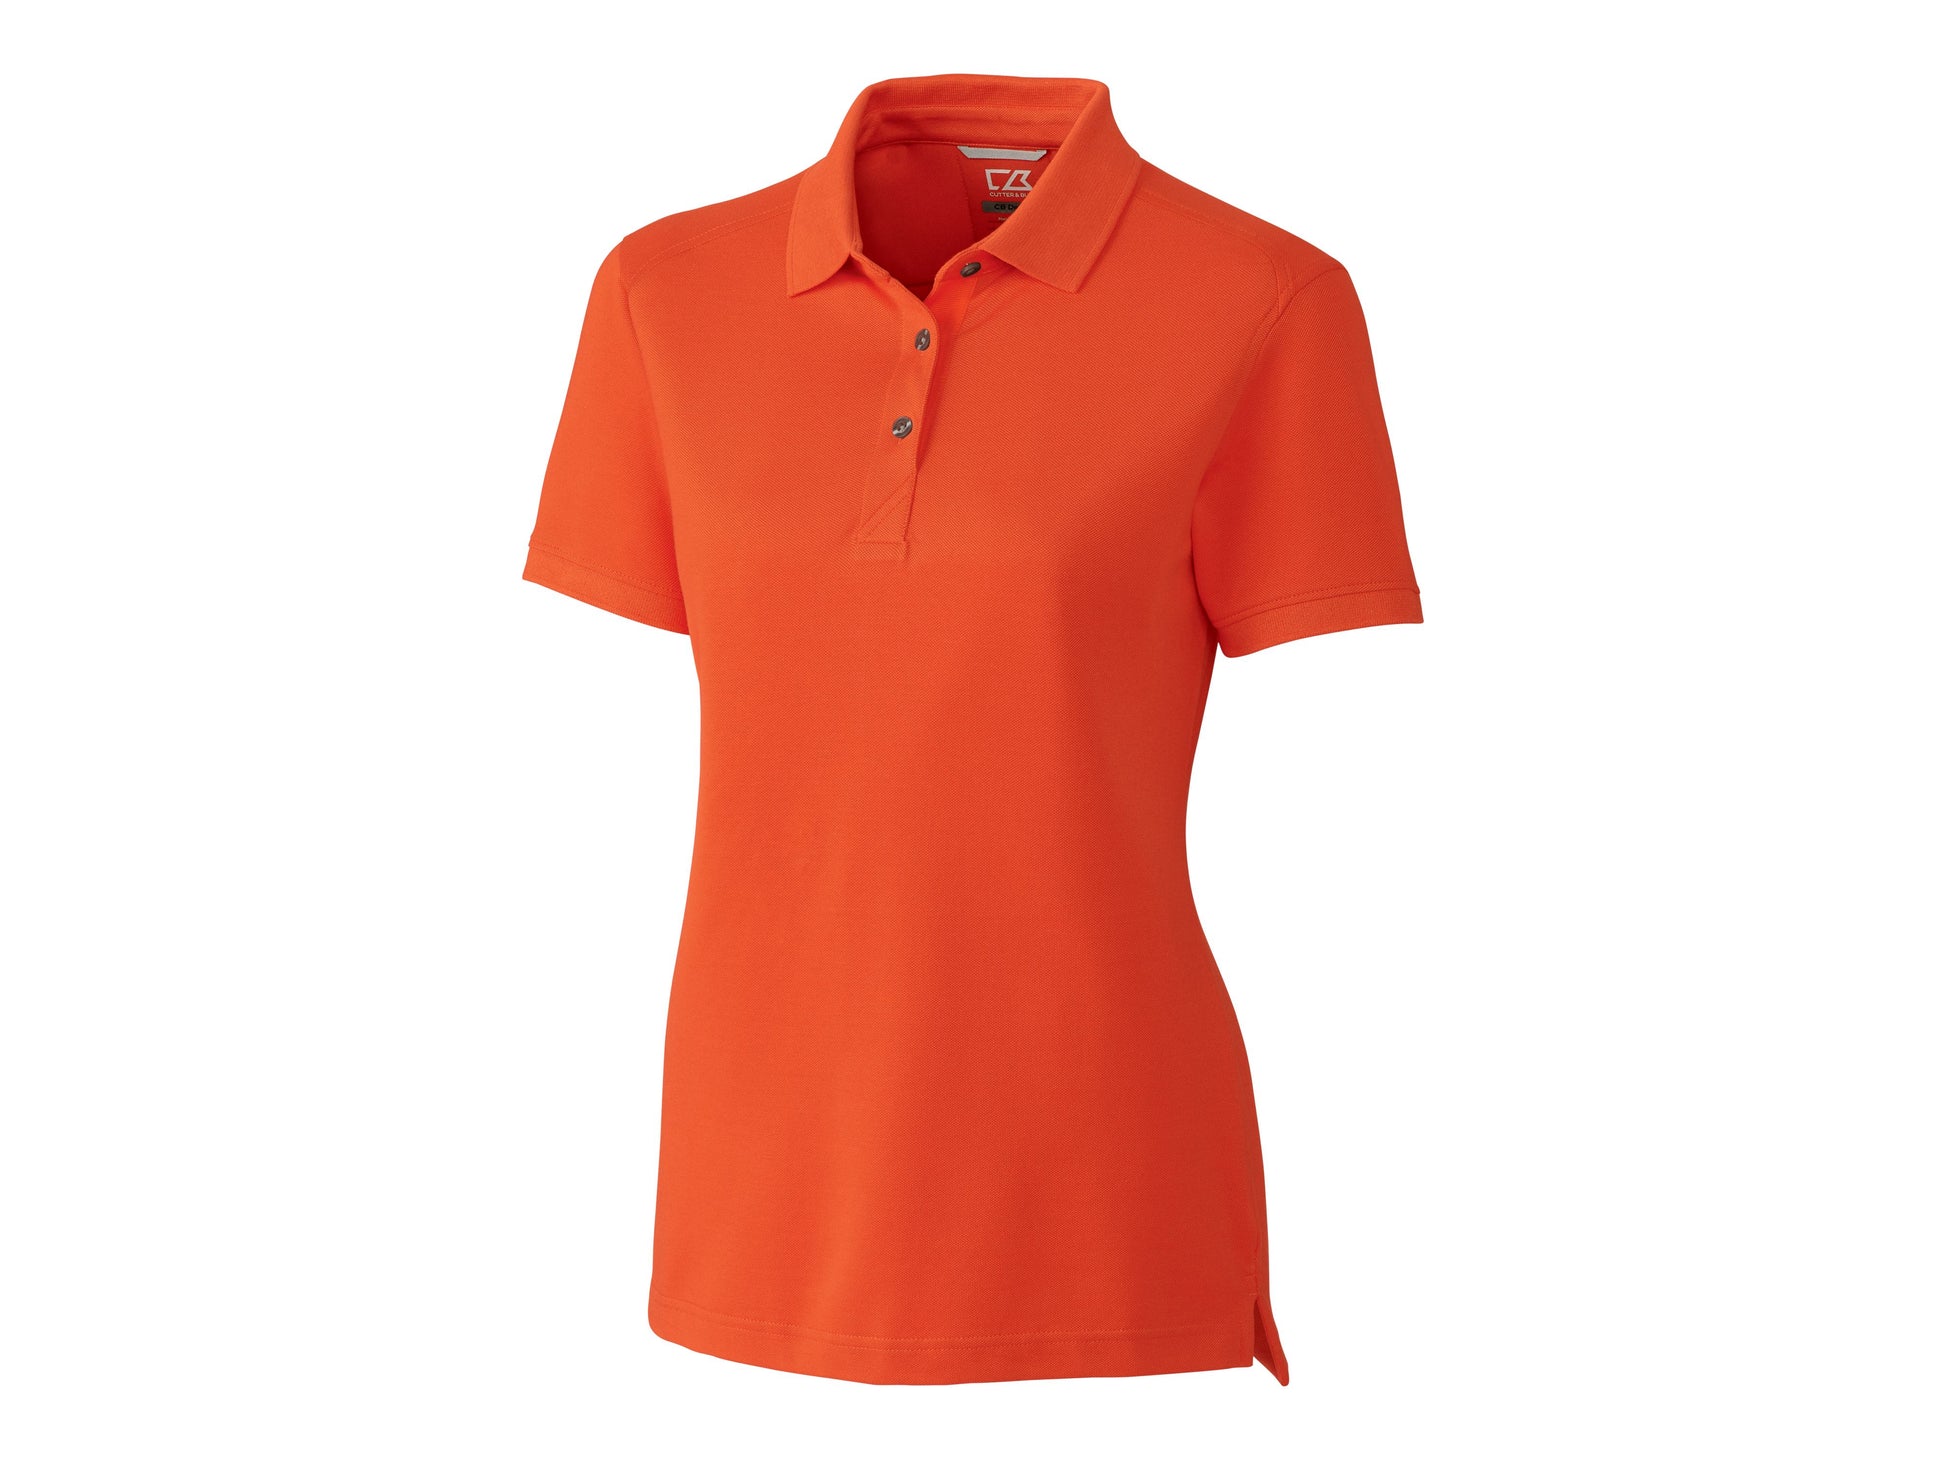 Cutter and Buck Shirts Advantage Polo (Women's Cut) - LCK08685 - College Orange